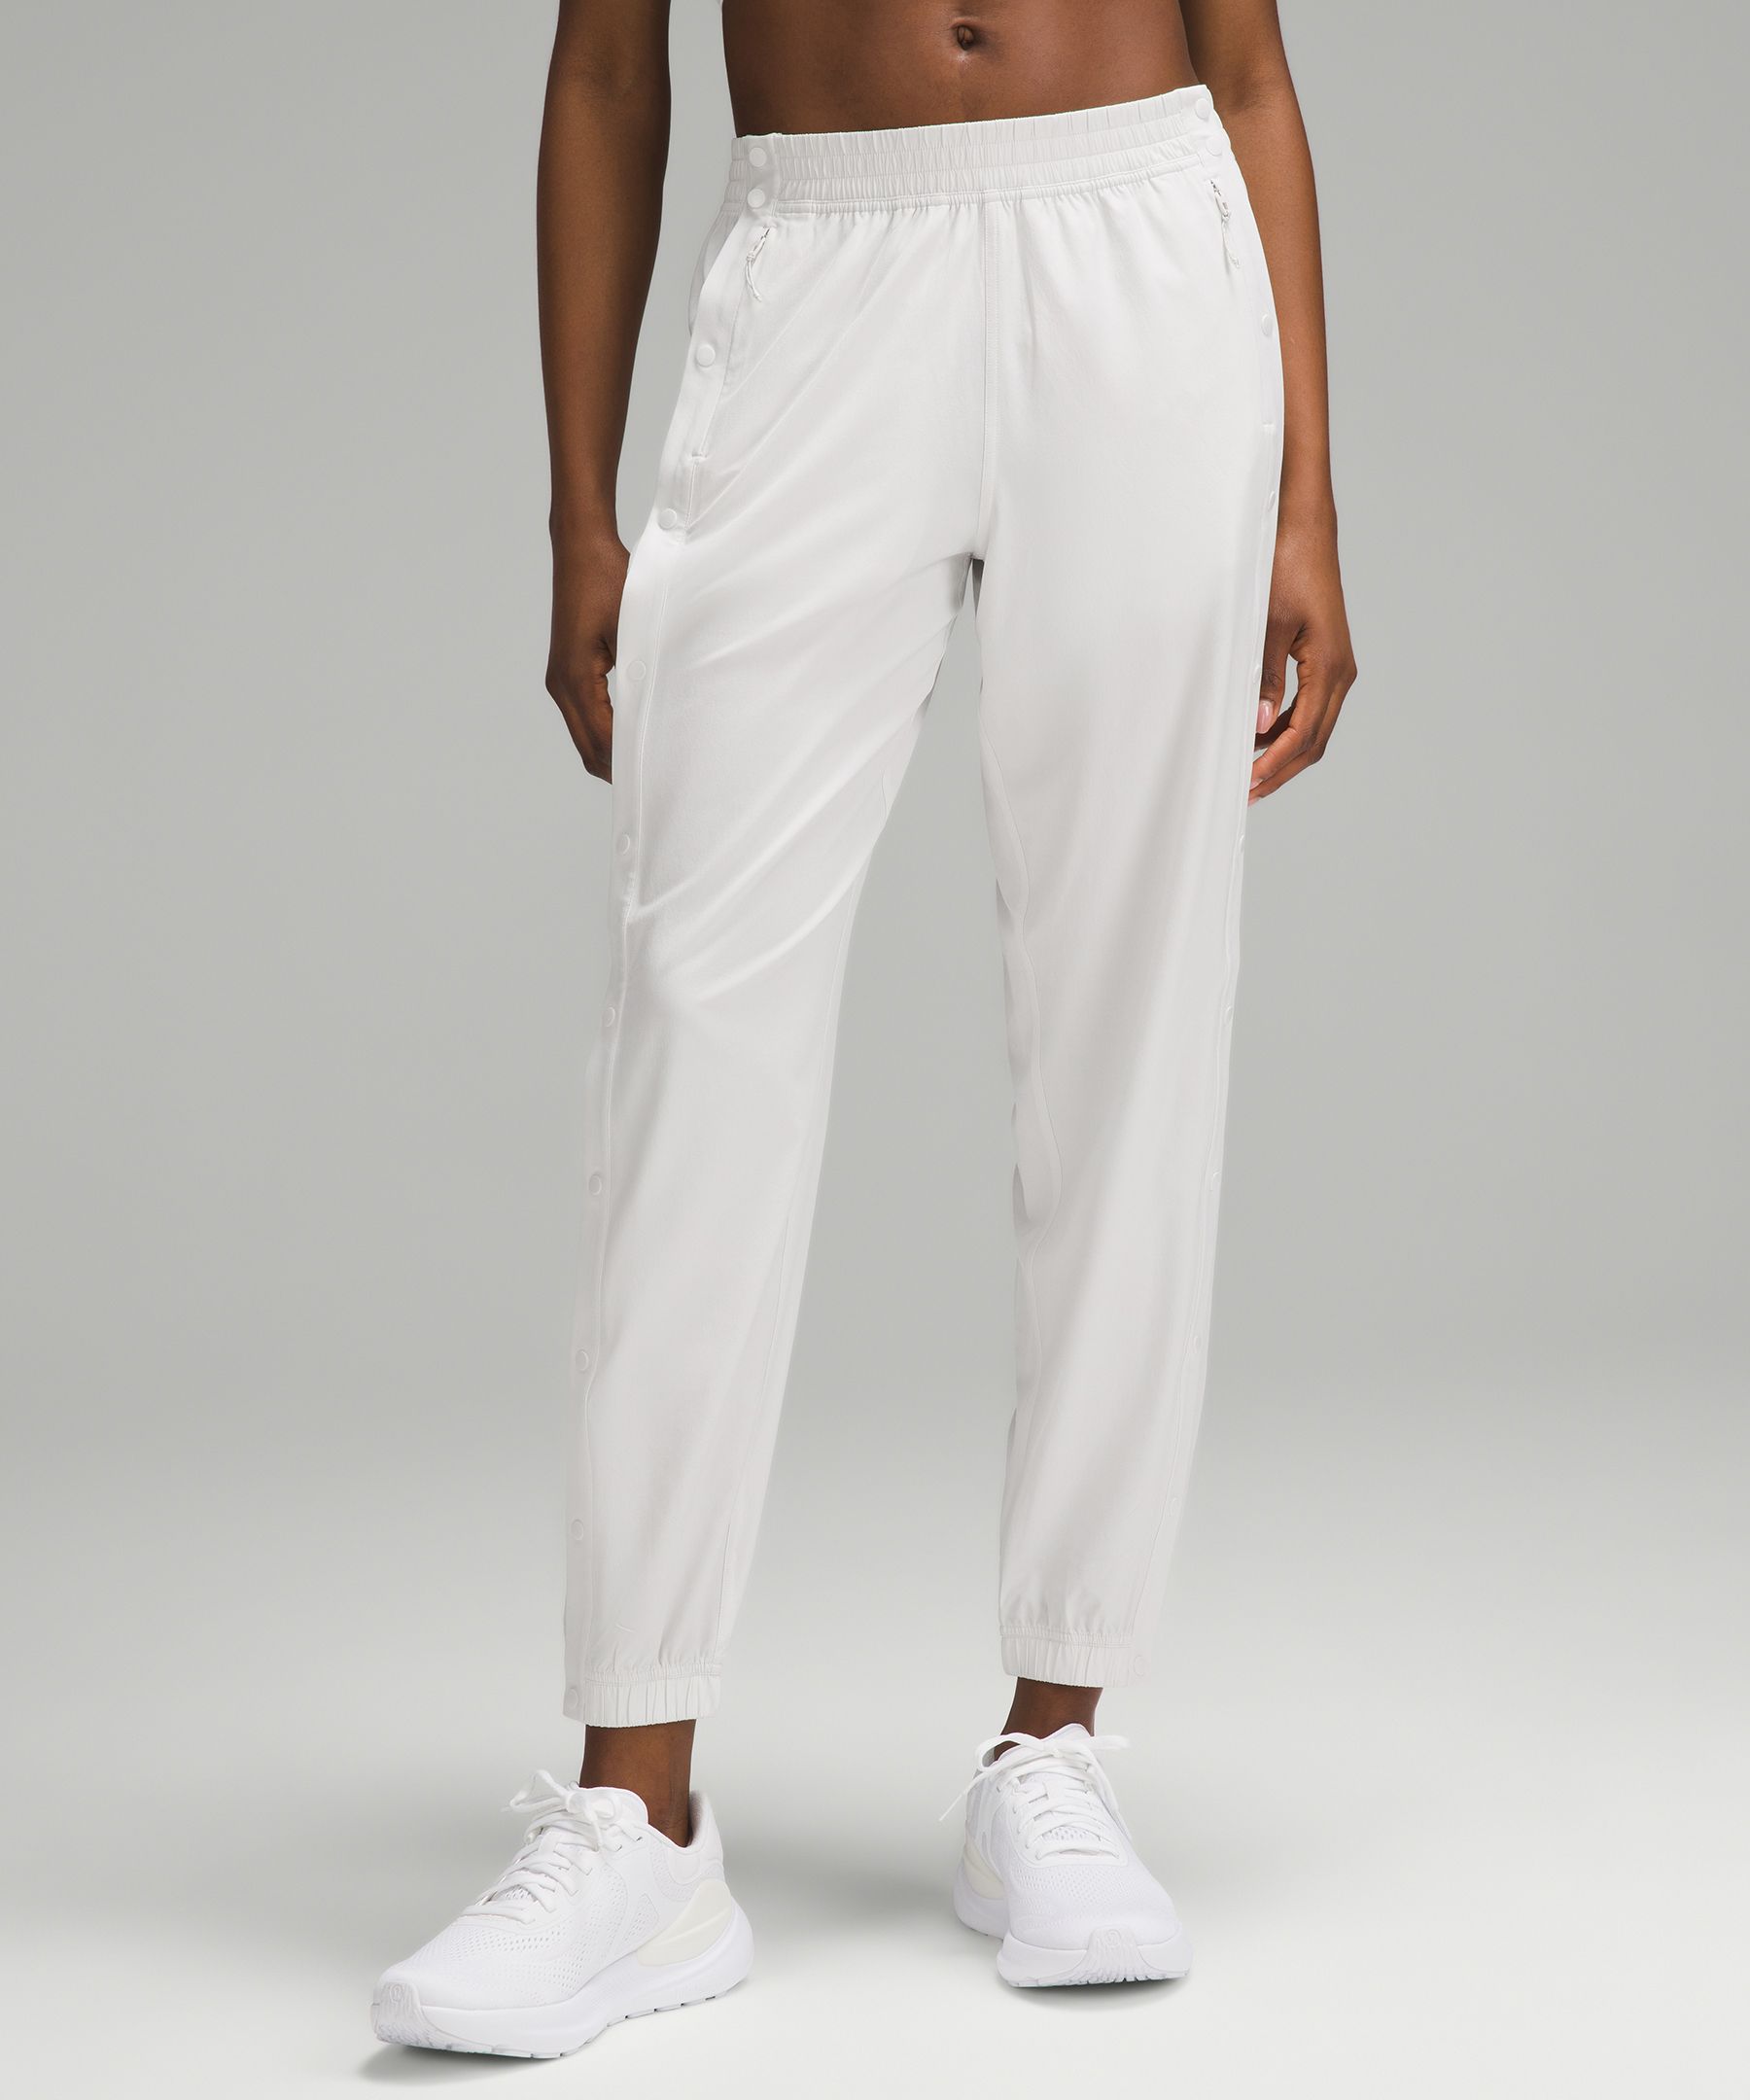 Lululemon Tear-away Mid-rise Track Pants In White